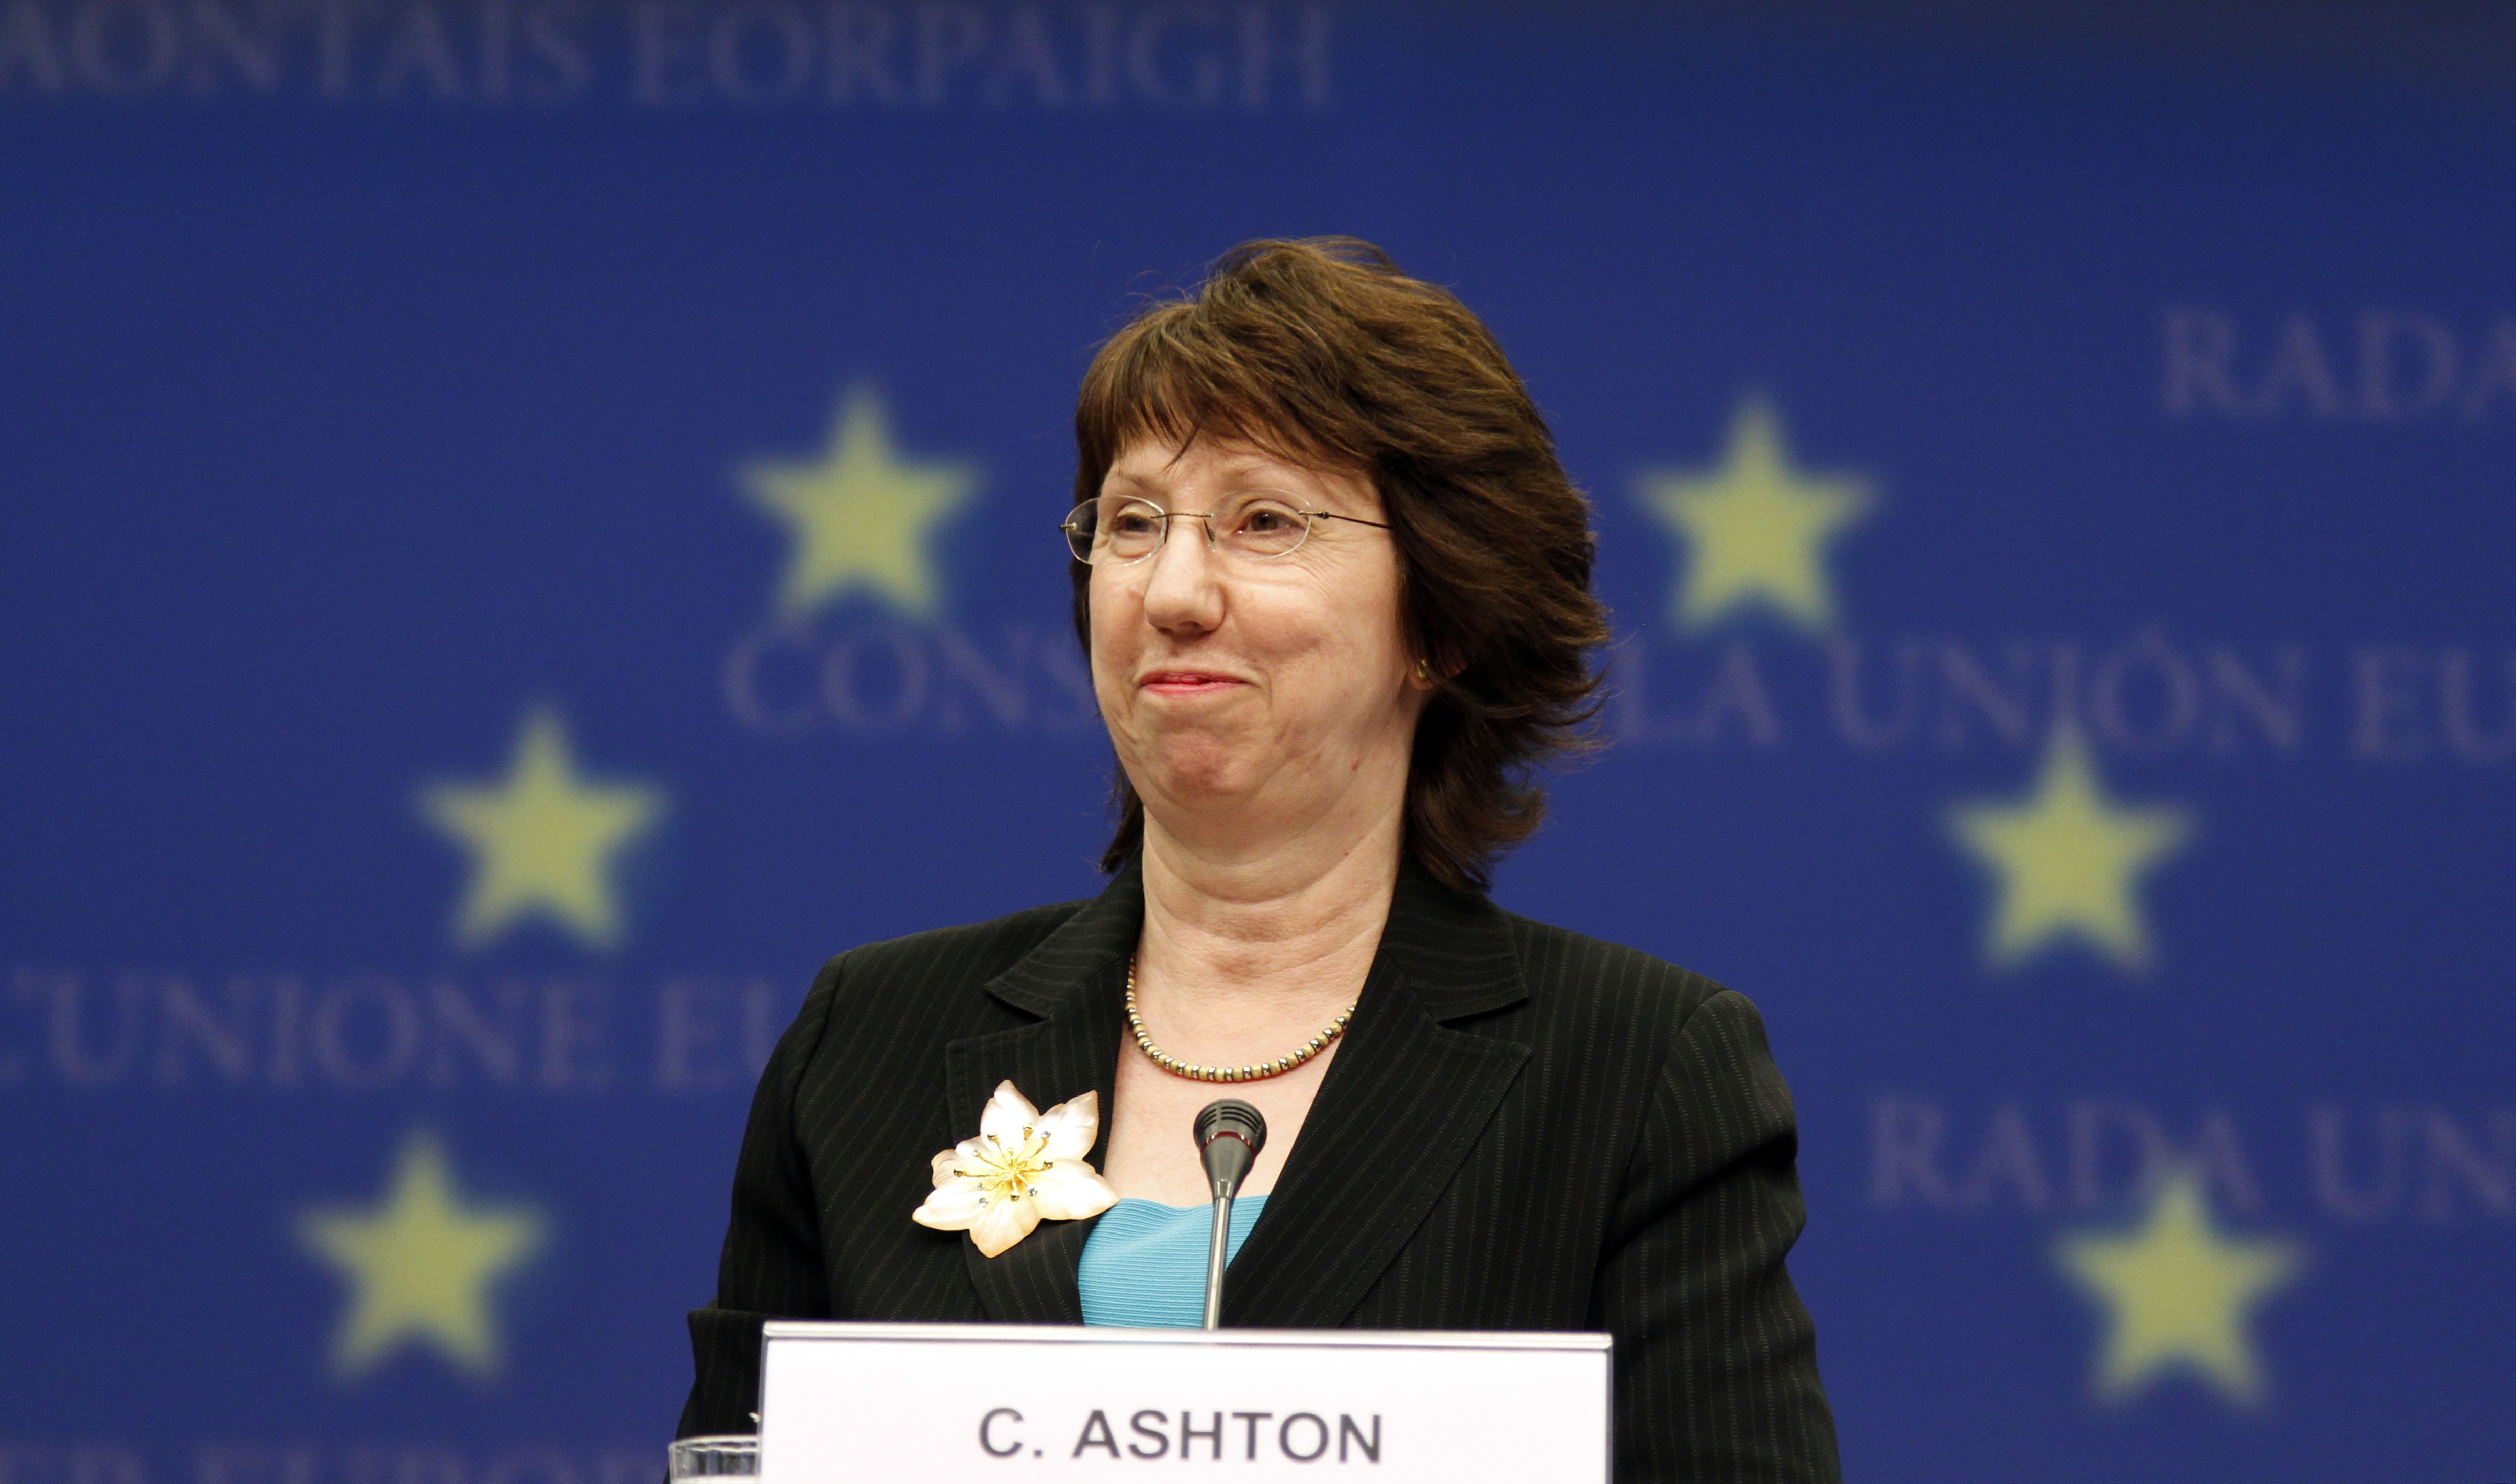 Catherine Ashton, Revolution, Uppror, Egypten, Kairo, Kravaller, Hillary Clinton, Jasminrevolutionen, EU